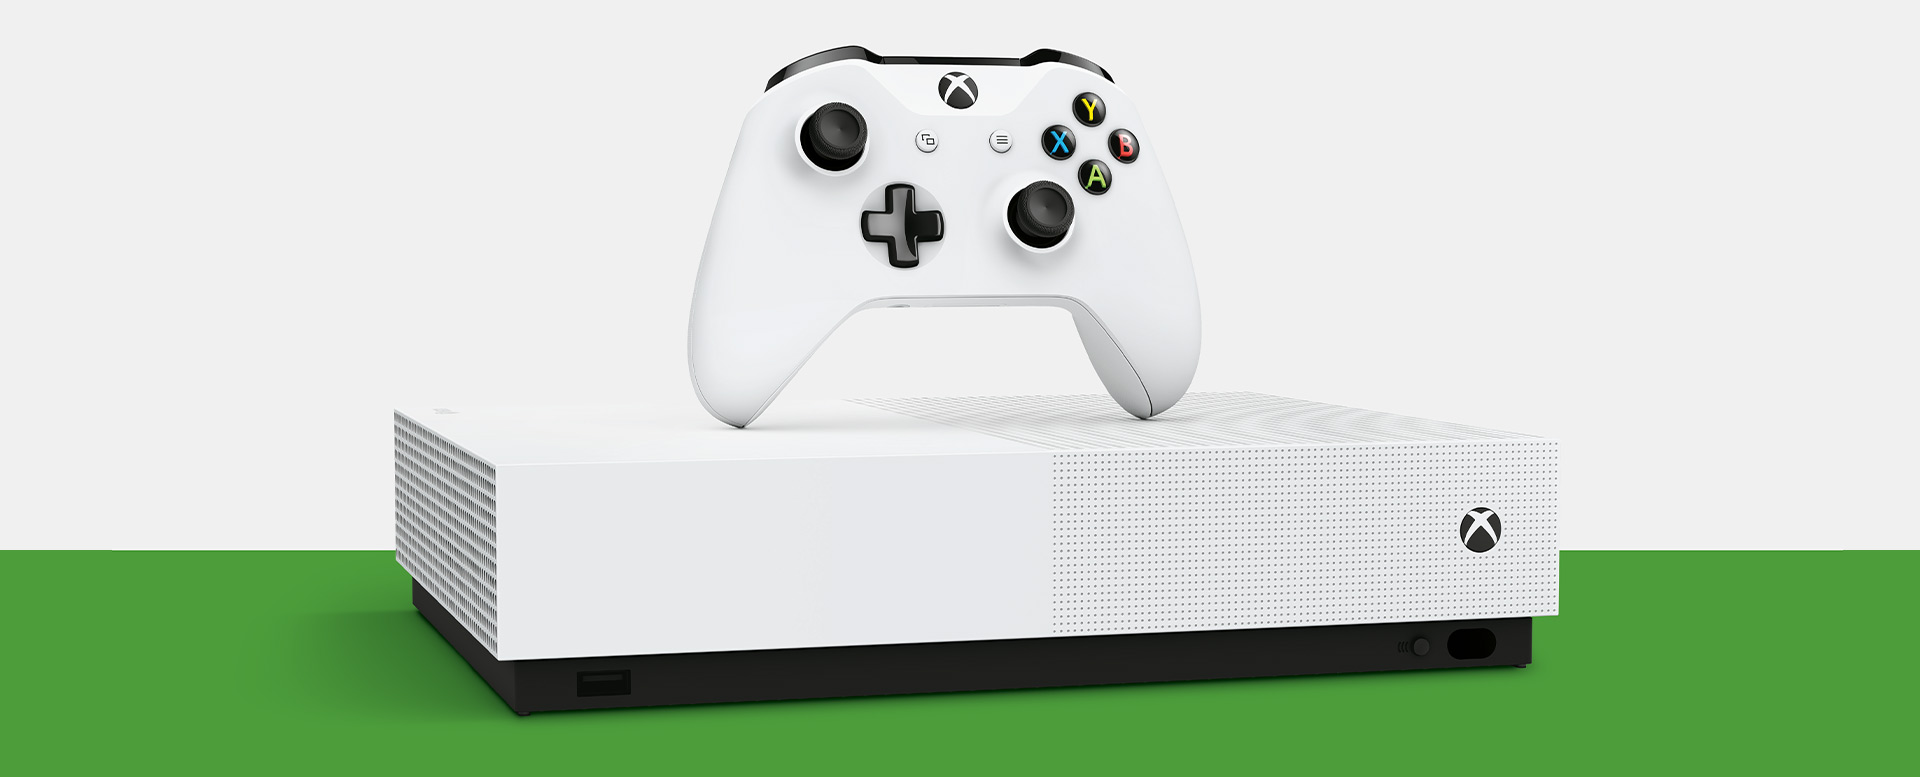 Xbox One S All-Digital Edition 主机位于硬件捆绑套装包装盒前面